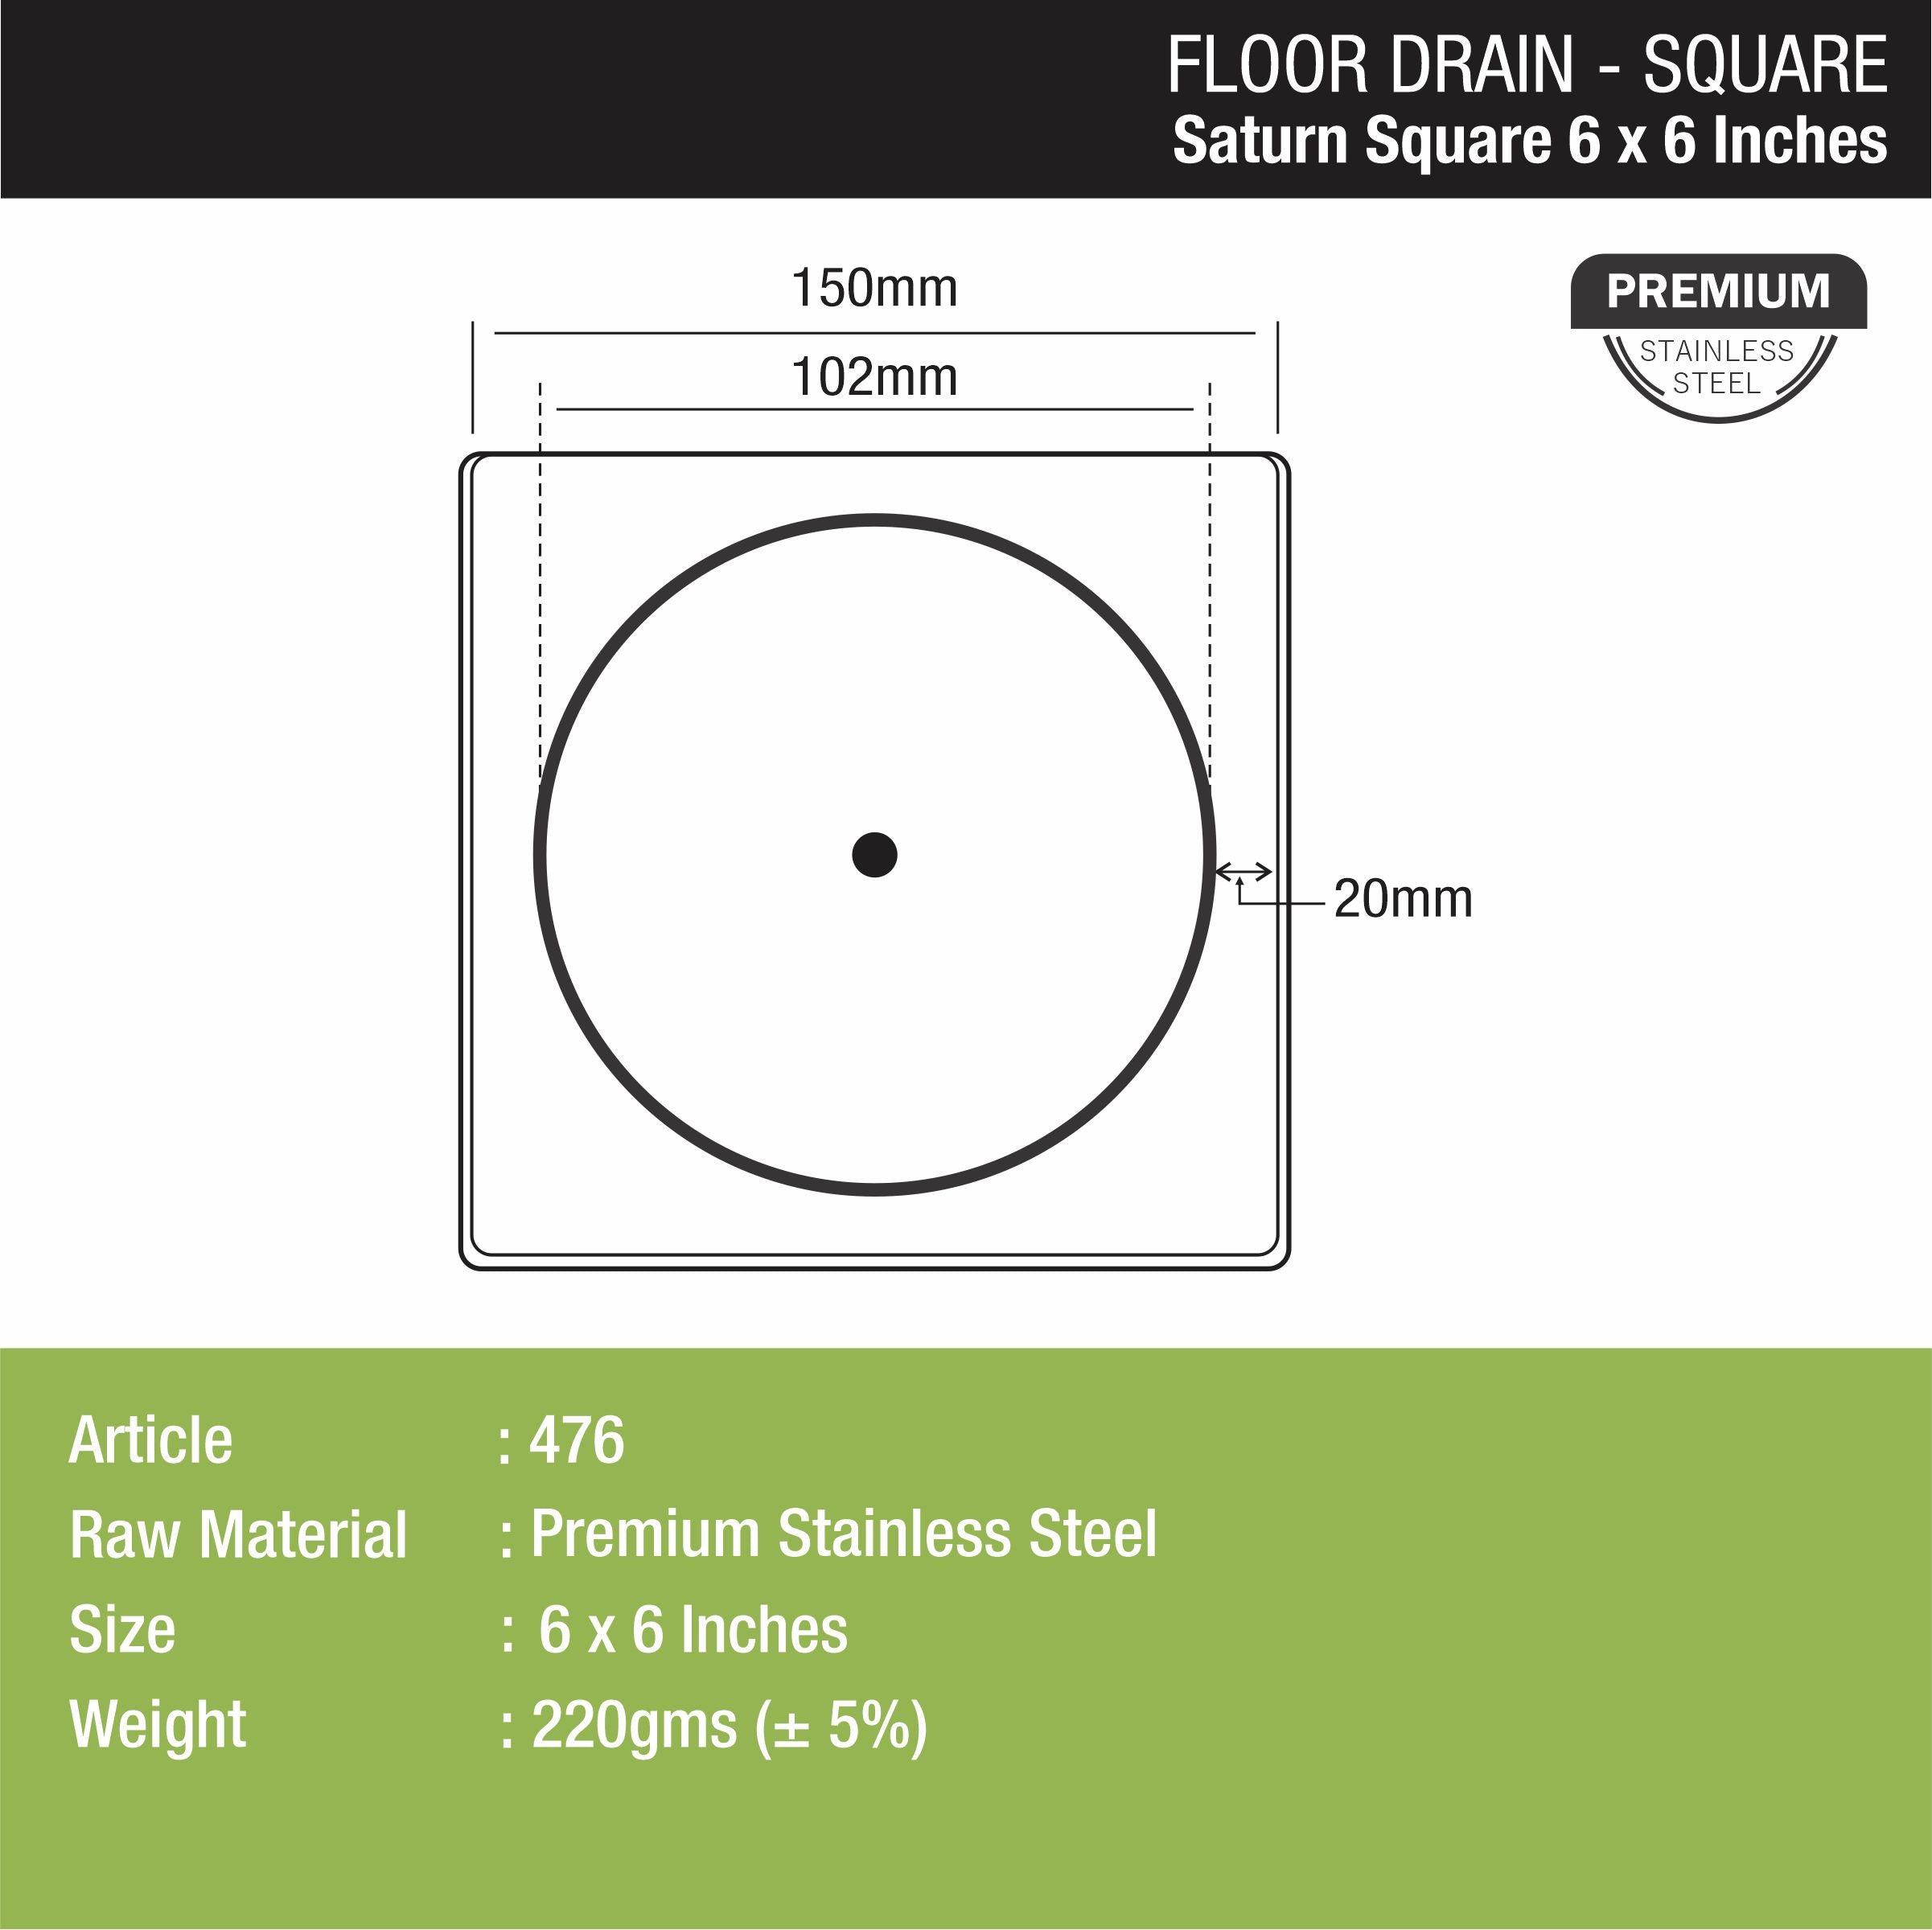 Saturn Square Floor Drain (6 x 6 Inches) - LIPKA - Lipka Home